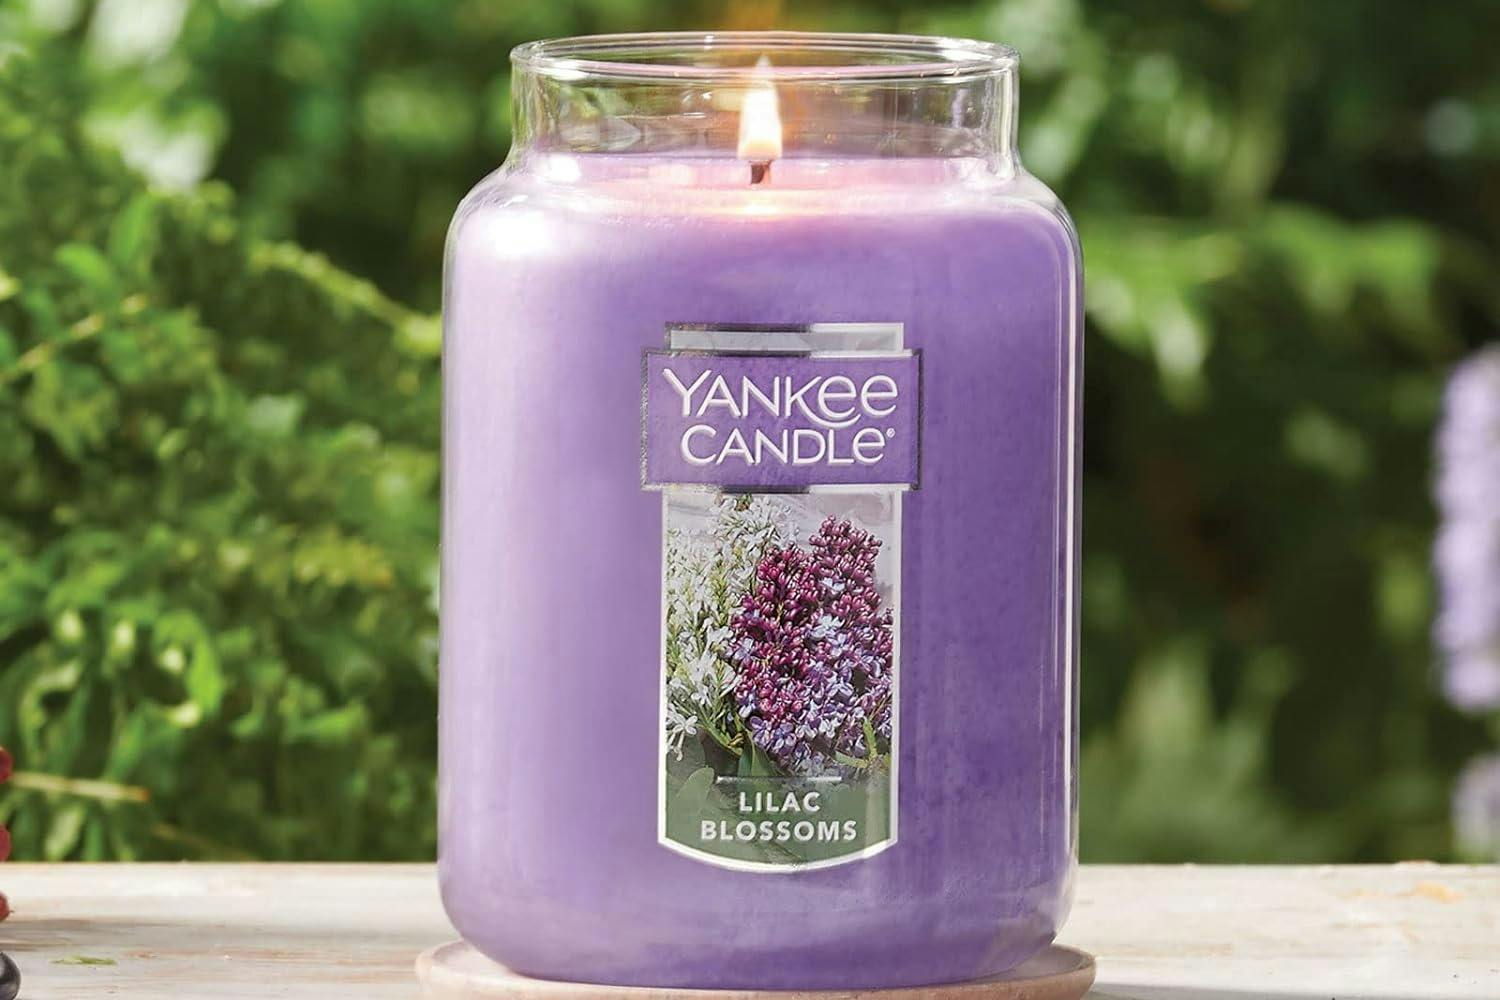 Yankee Candle Large Jar Candles, $10 on Amazon (Reg. $30) - The Krazy ...